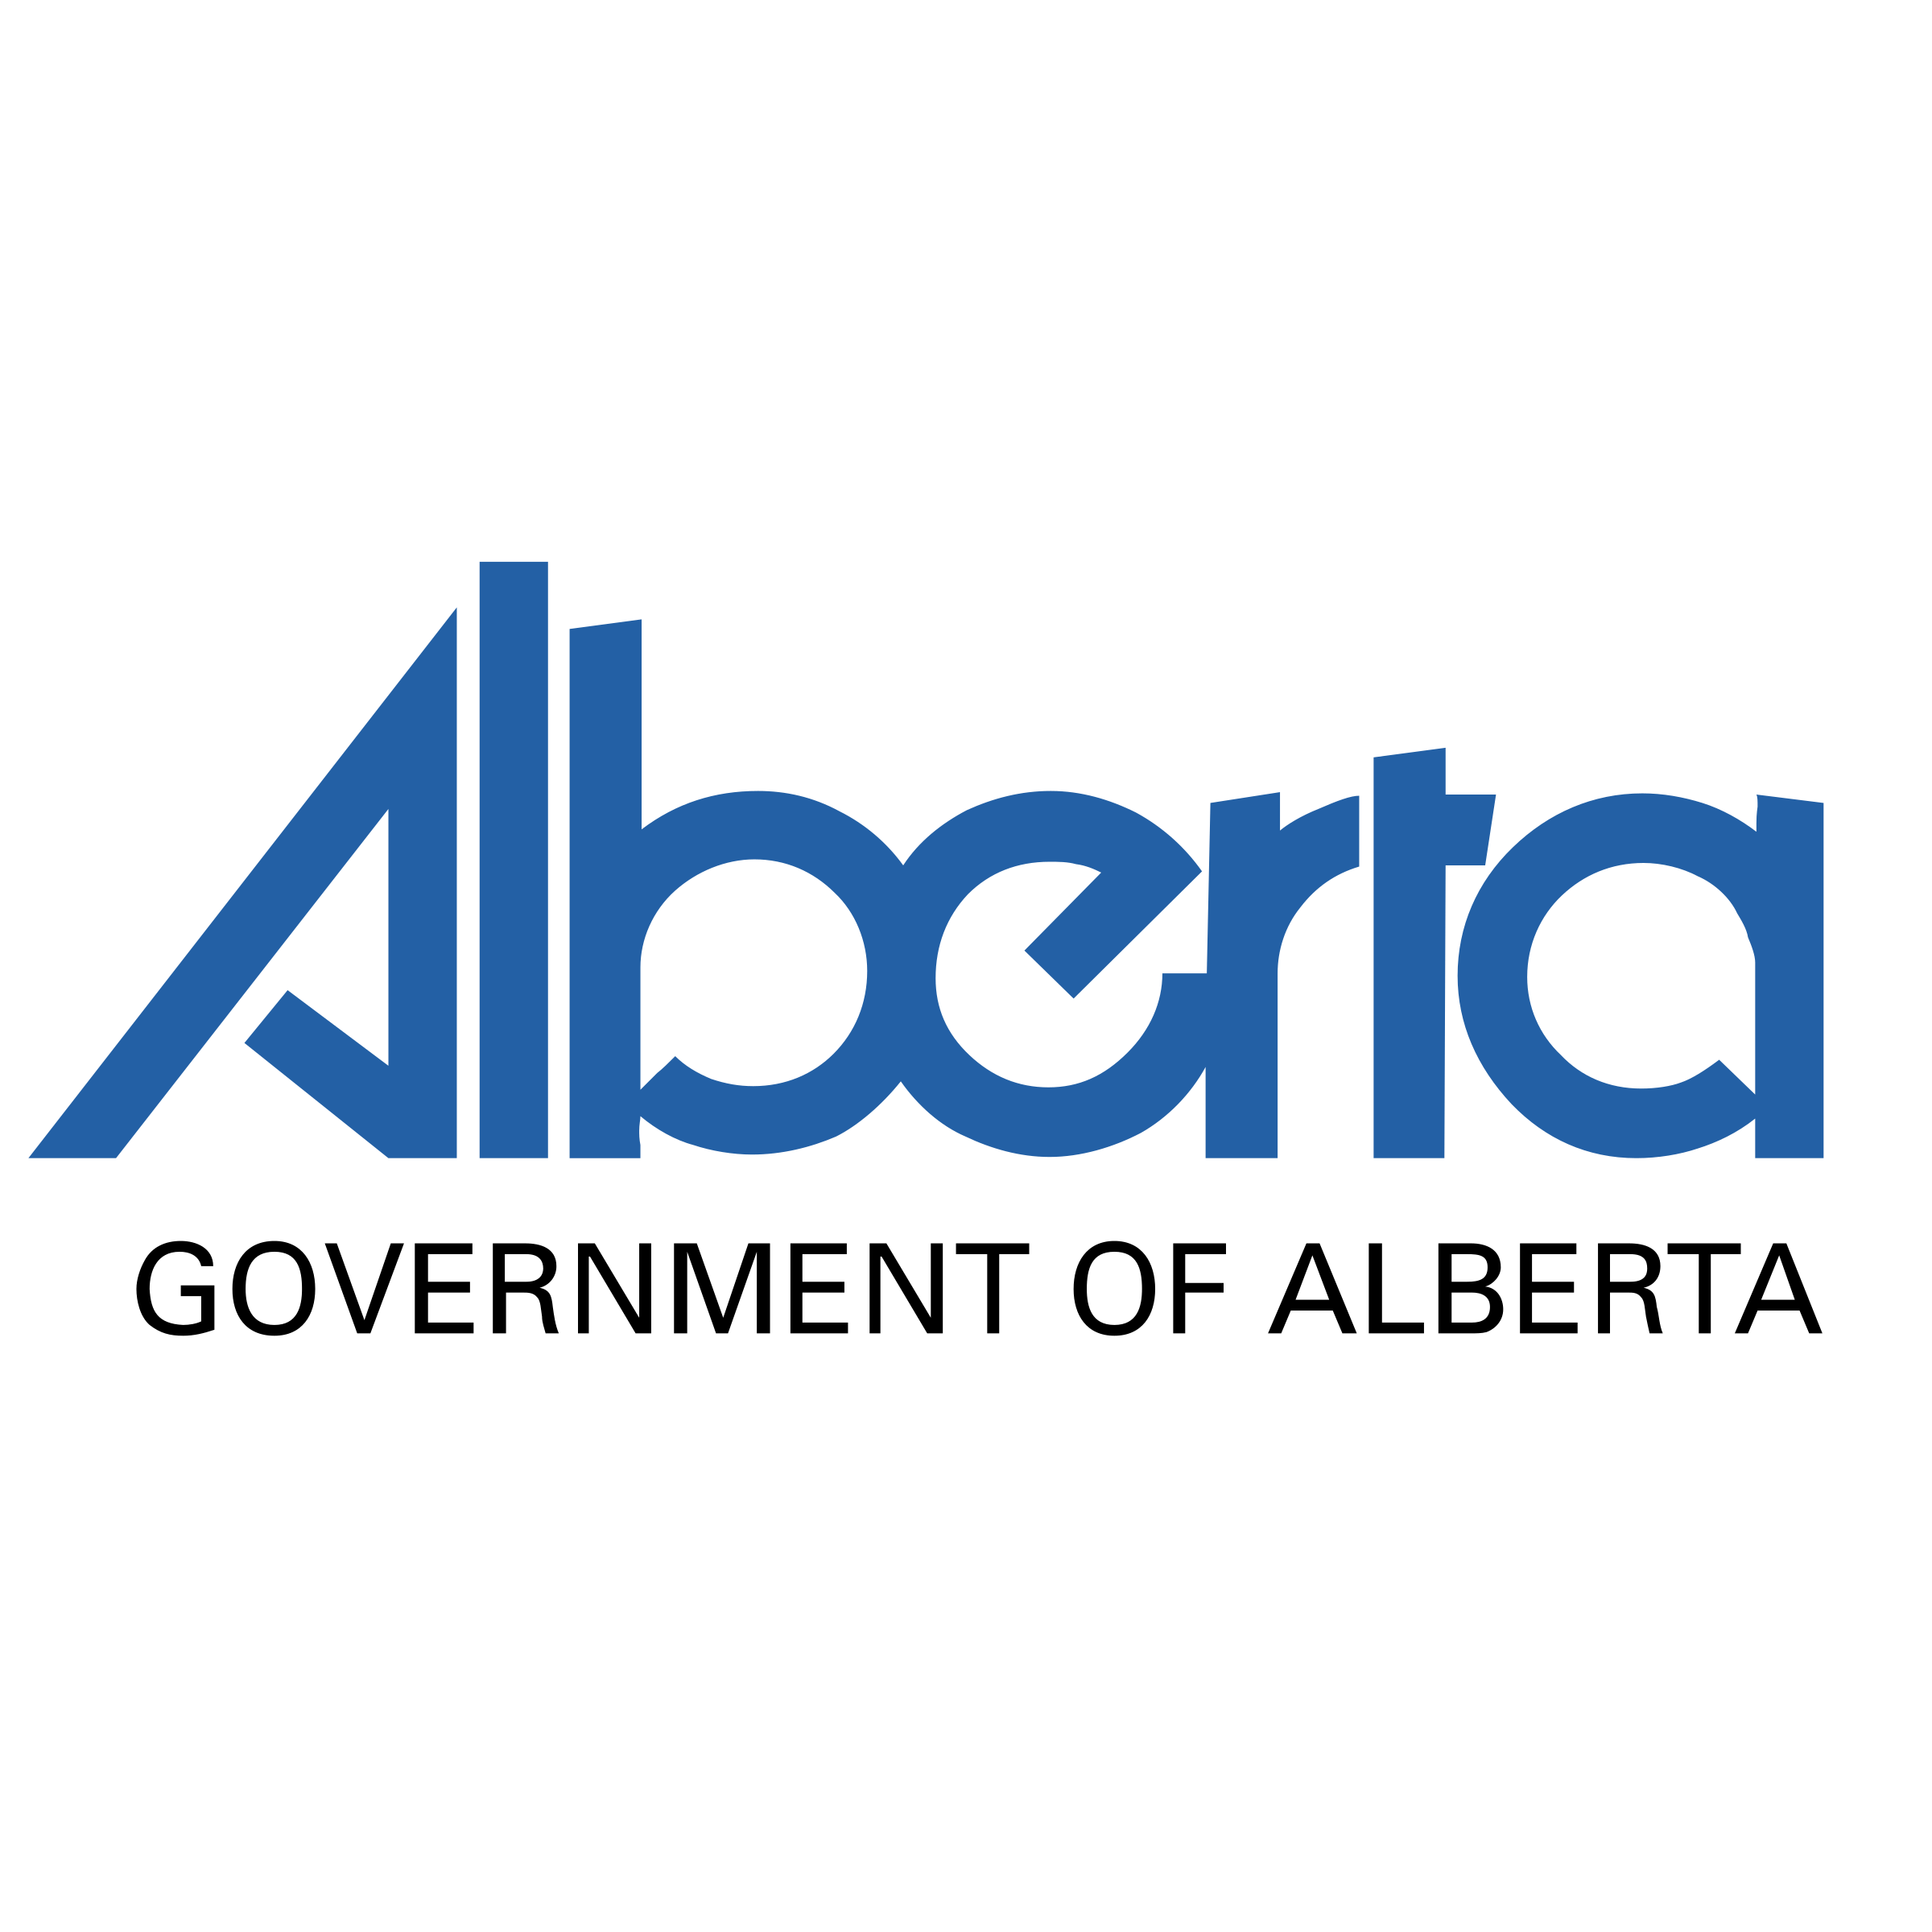 Alberta Logo - Alberta Logo PNG Transparent & SVG Vector - Freebie Supply